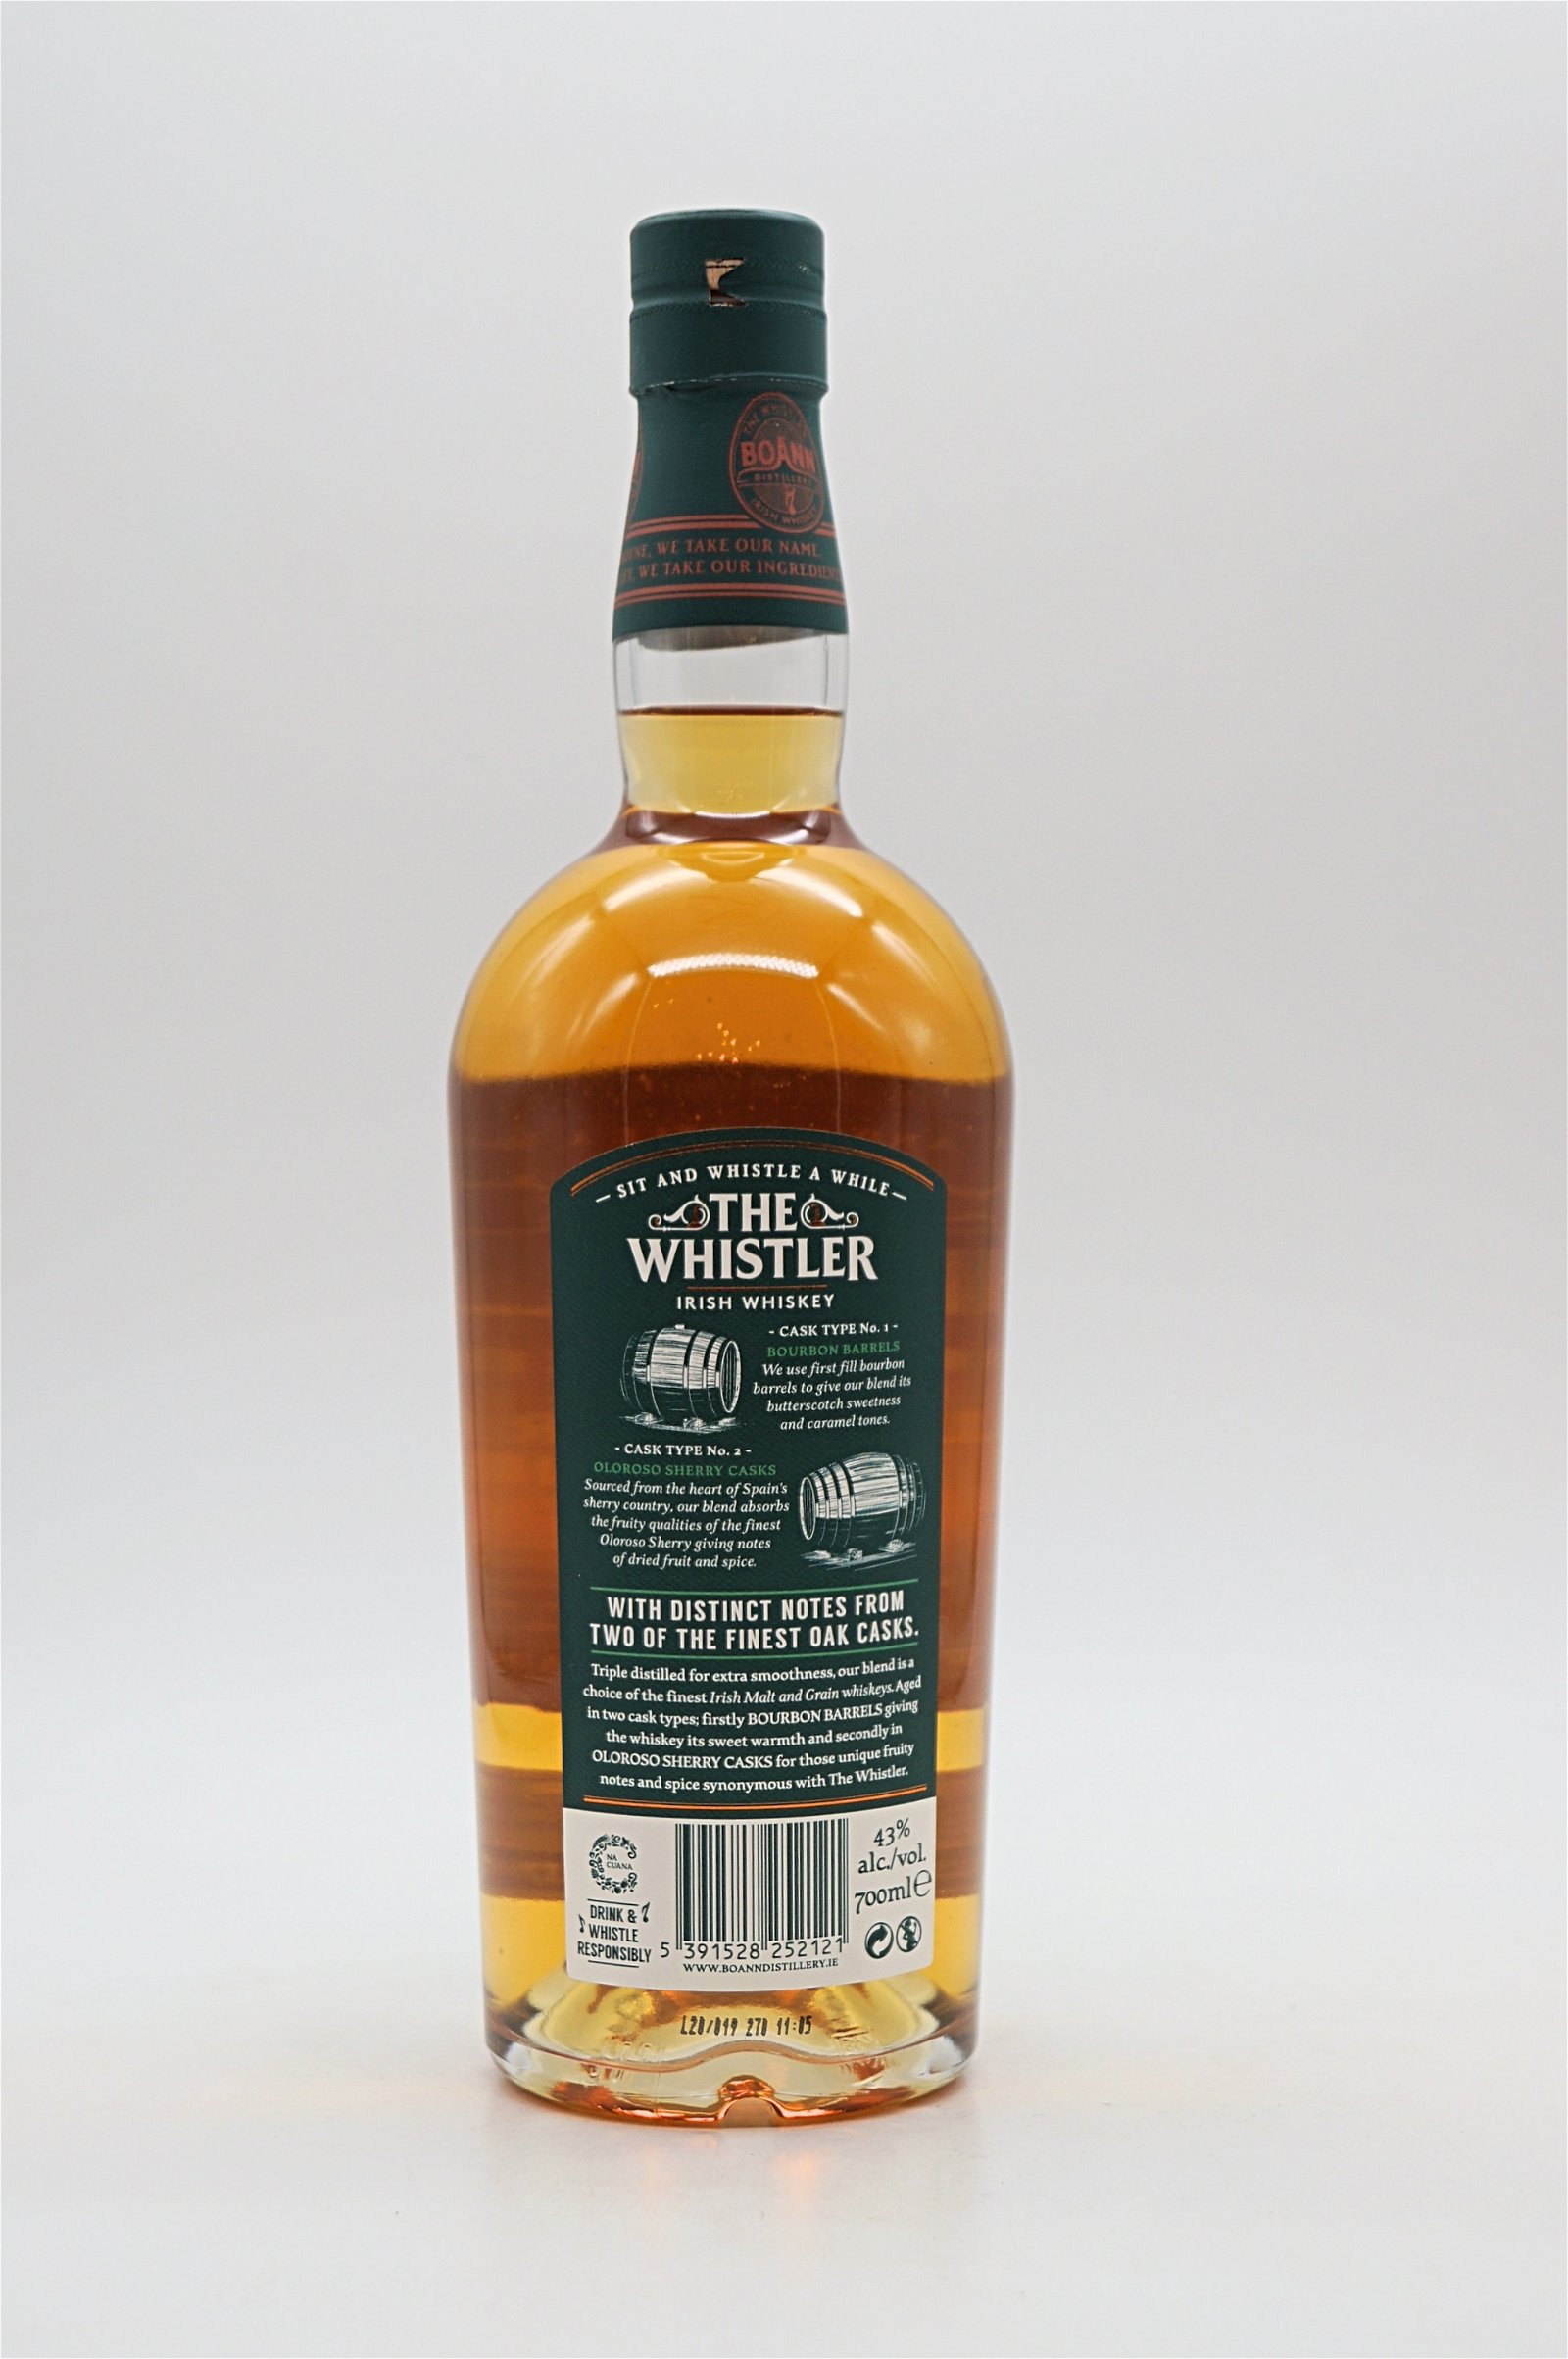 The Whistler Oloroso Sherry Cask Finish Blended Irish Whiskey